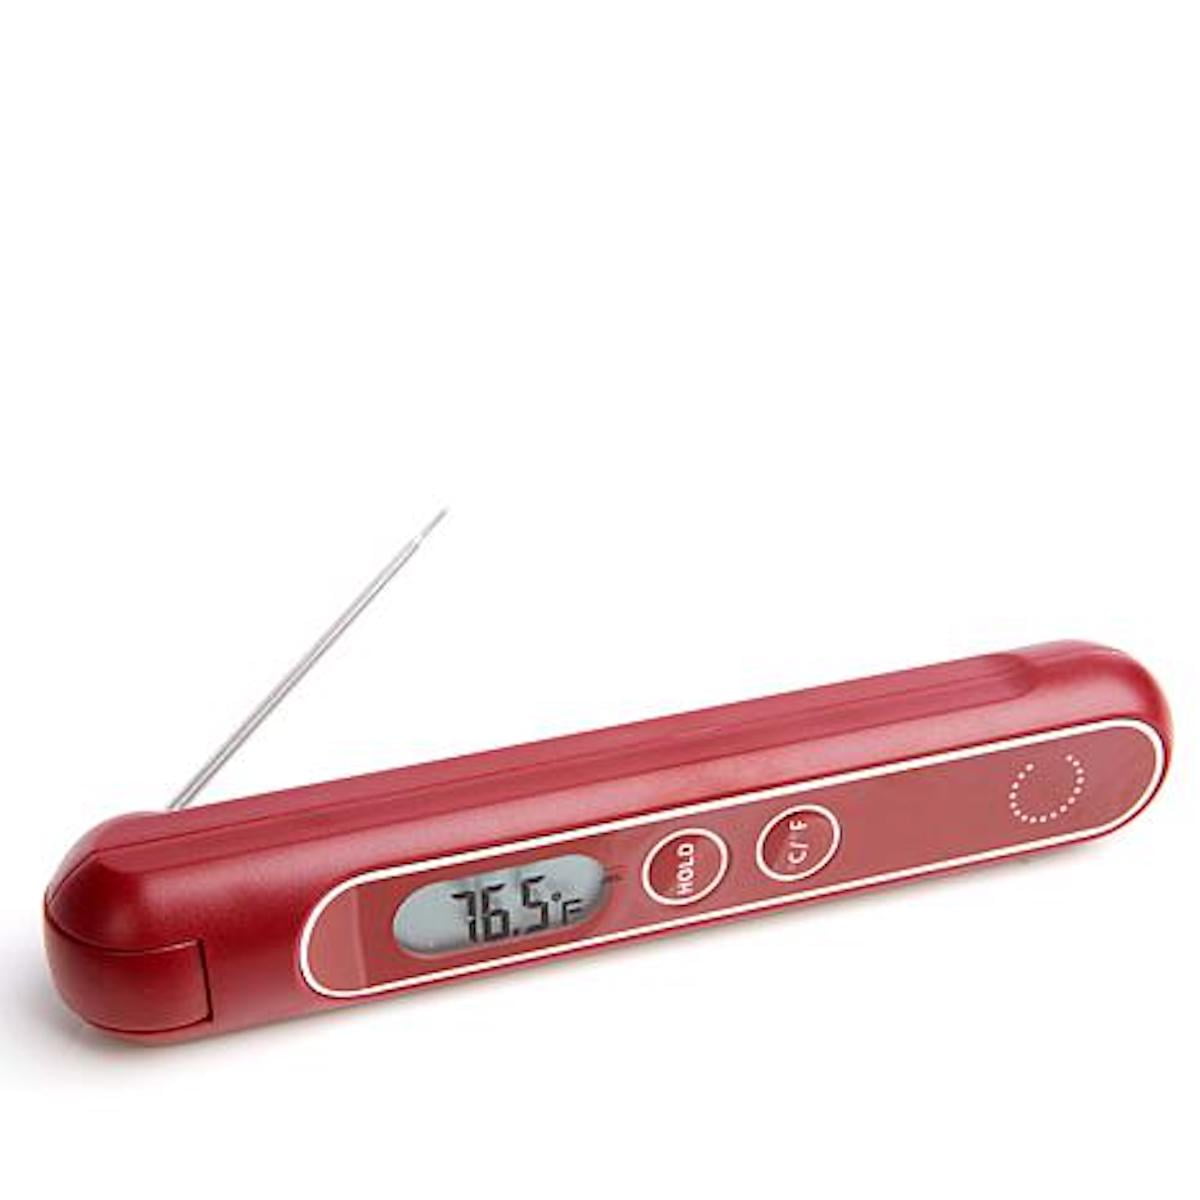 Smalibal Digital Meat Thermometer, Battery Powered Waterproof